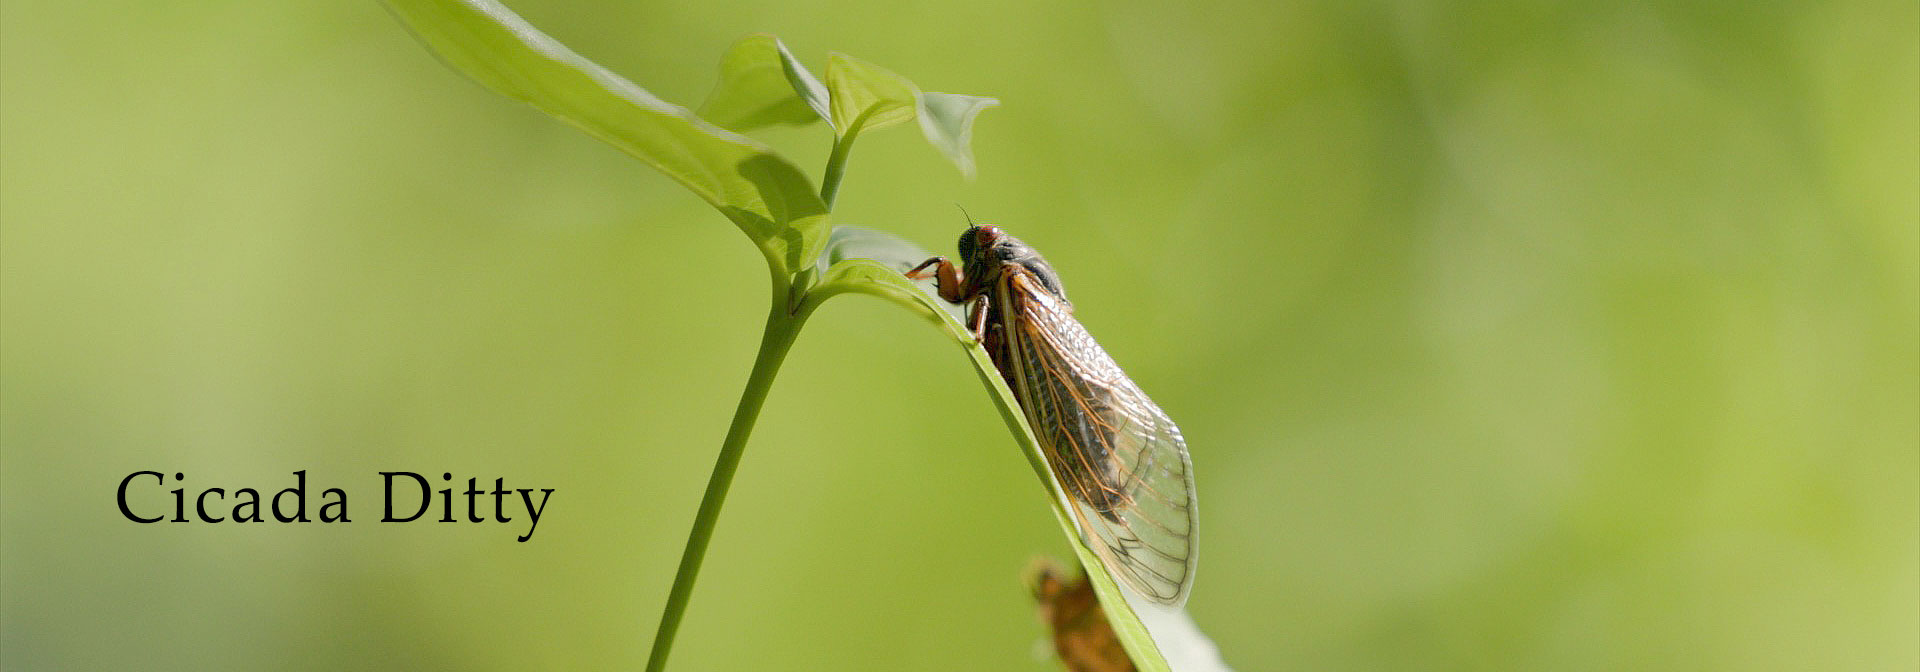 Cicada Ditty